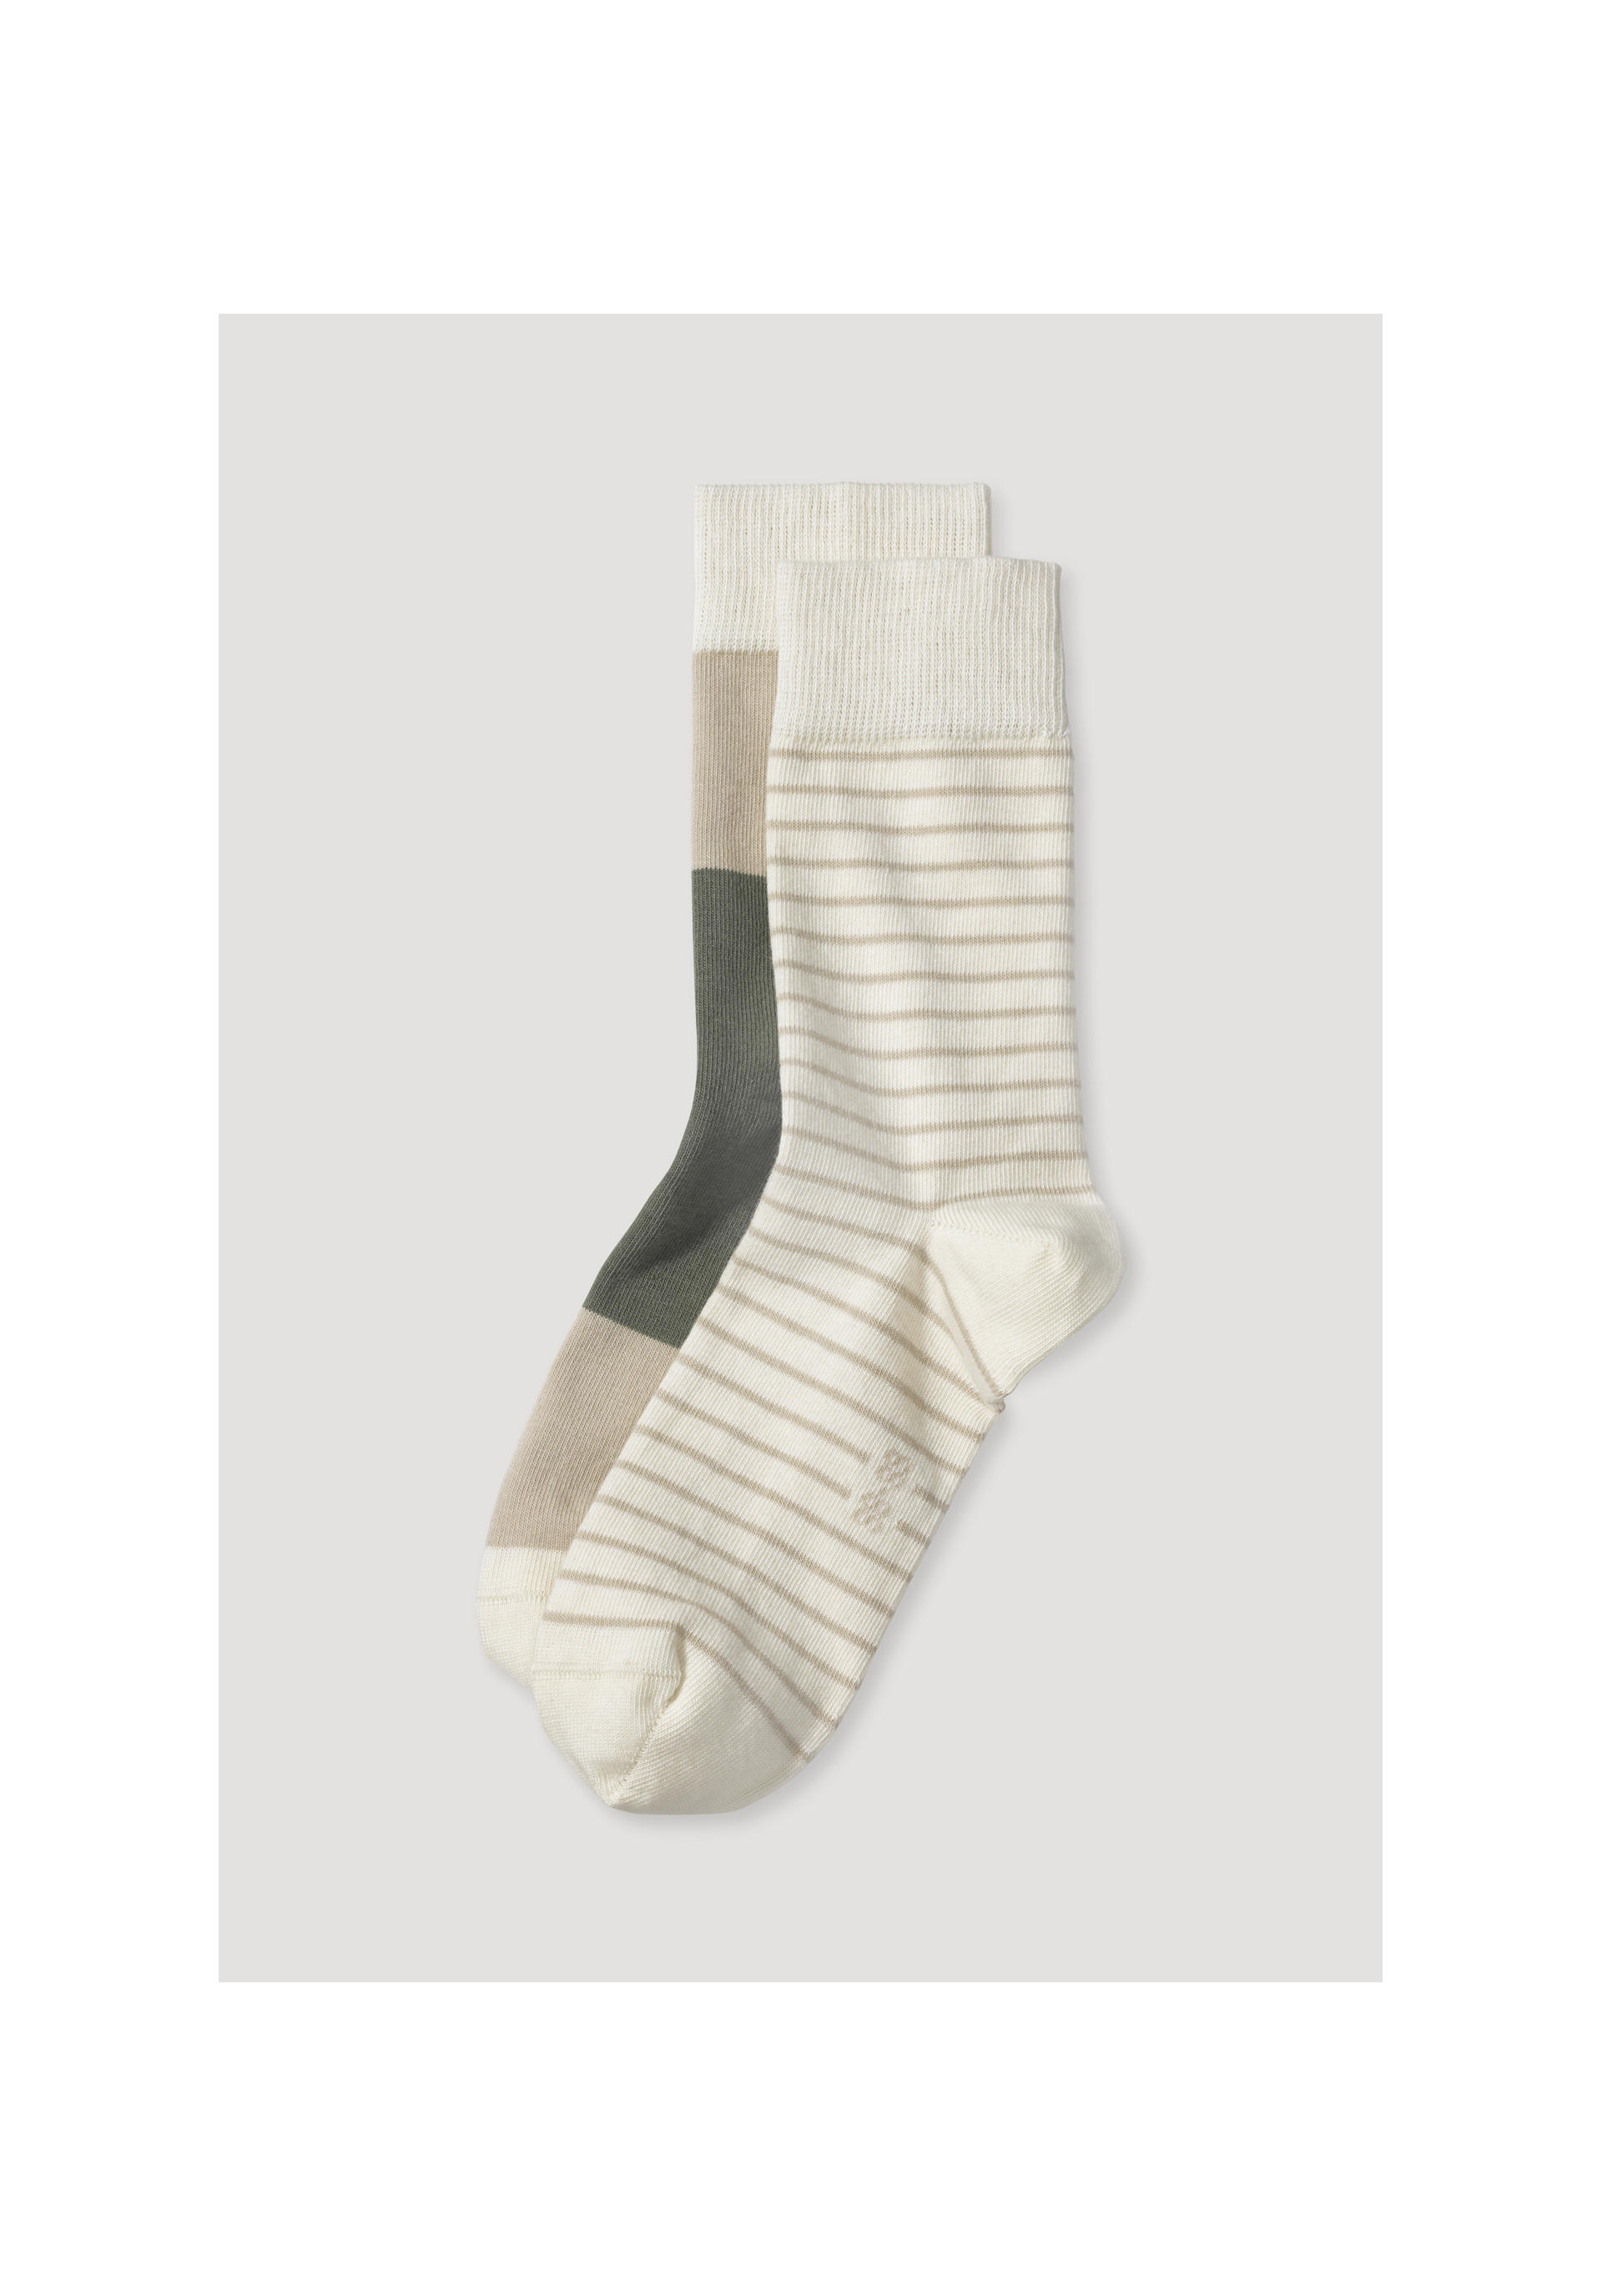 Fashion Womens Socks Casual Cotton Warm Soft Flexible Striped Ankle-High Socks